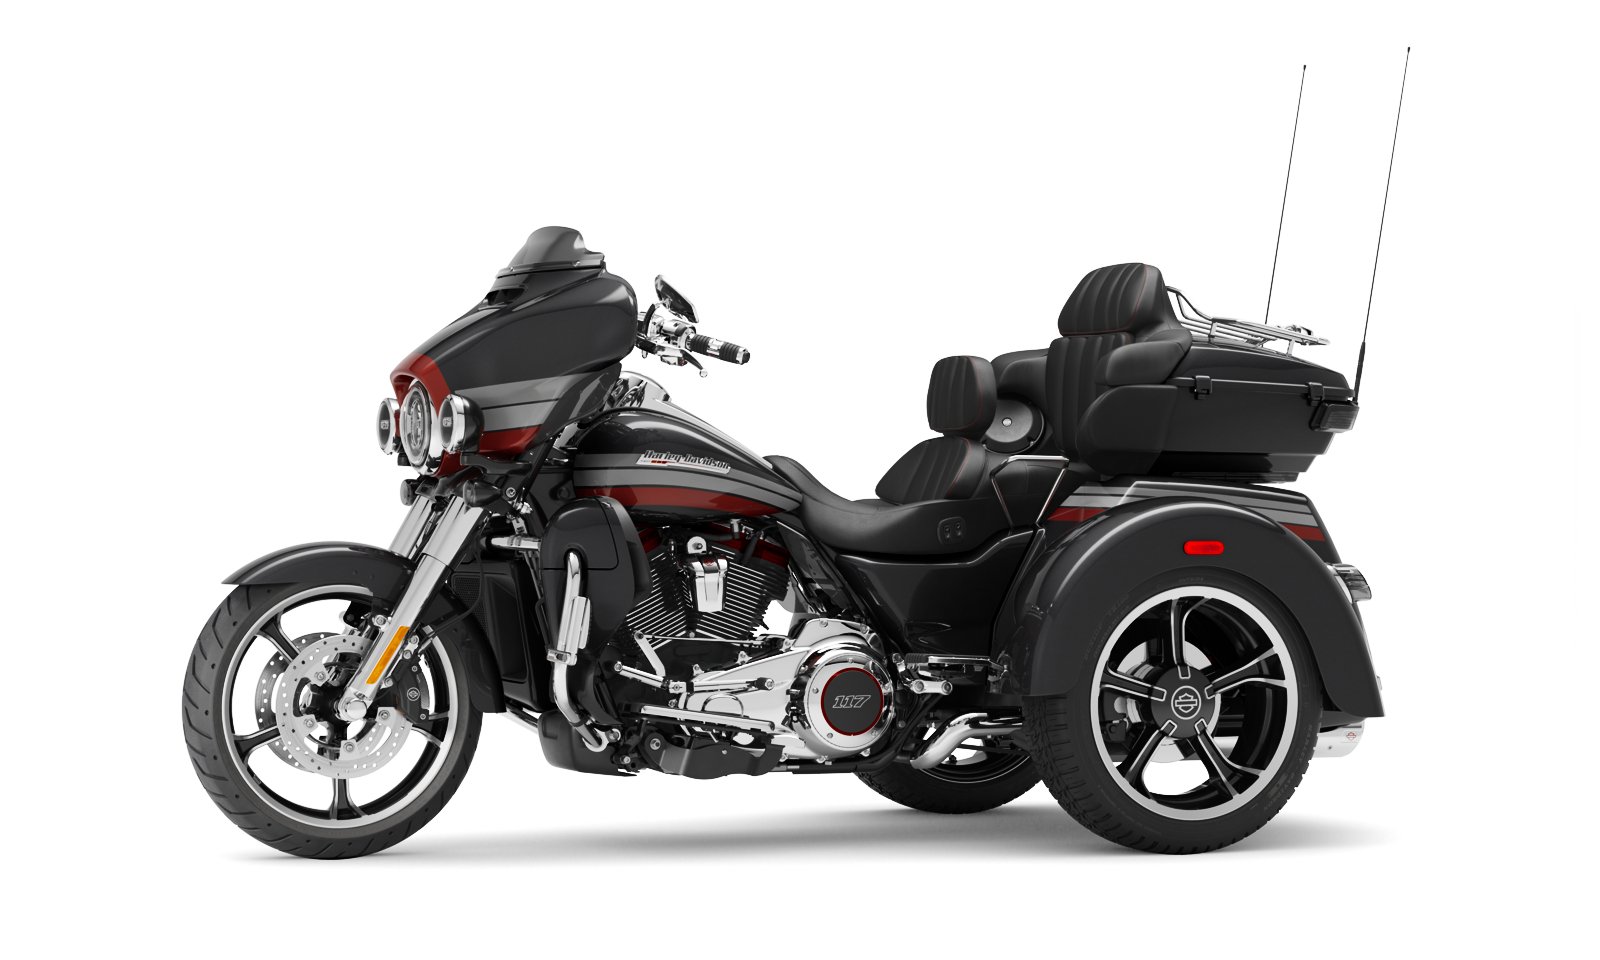 2020 Cvo Tri Glide Motorcycle Harley Davidson Asia Pacific Markets